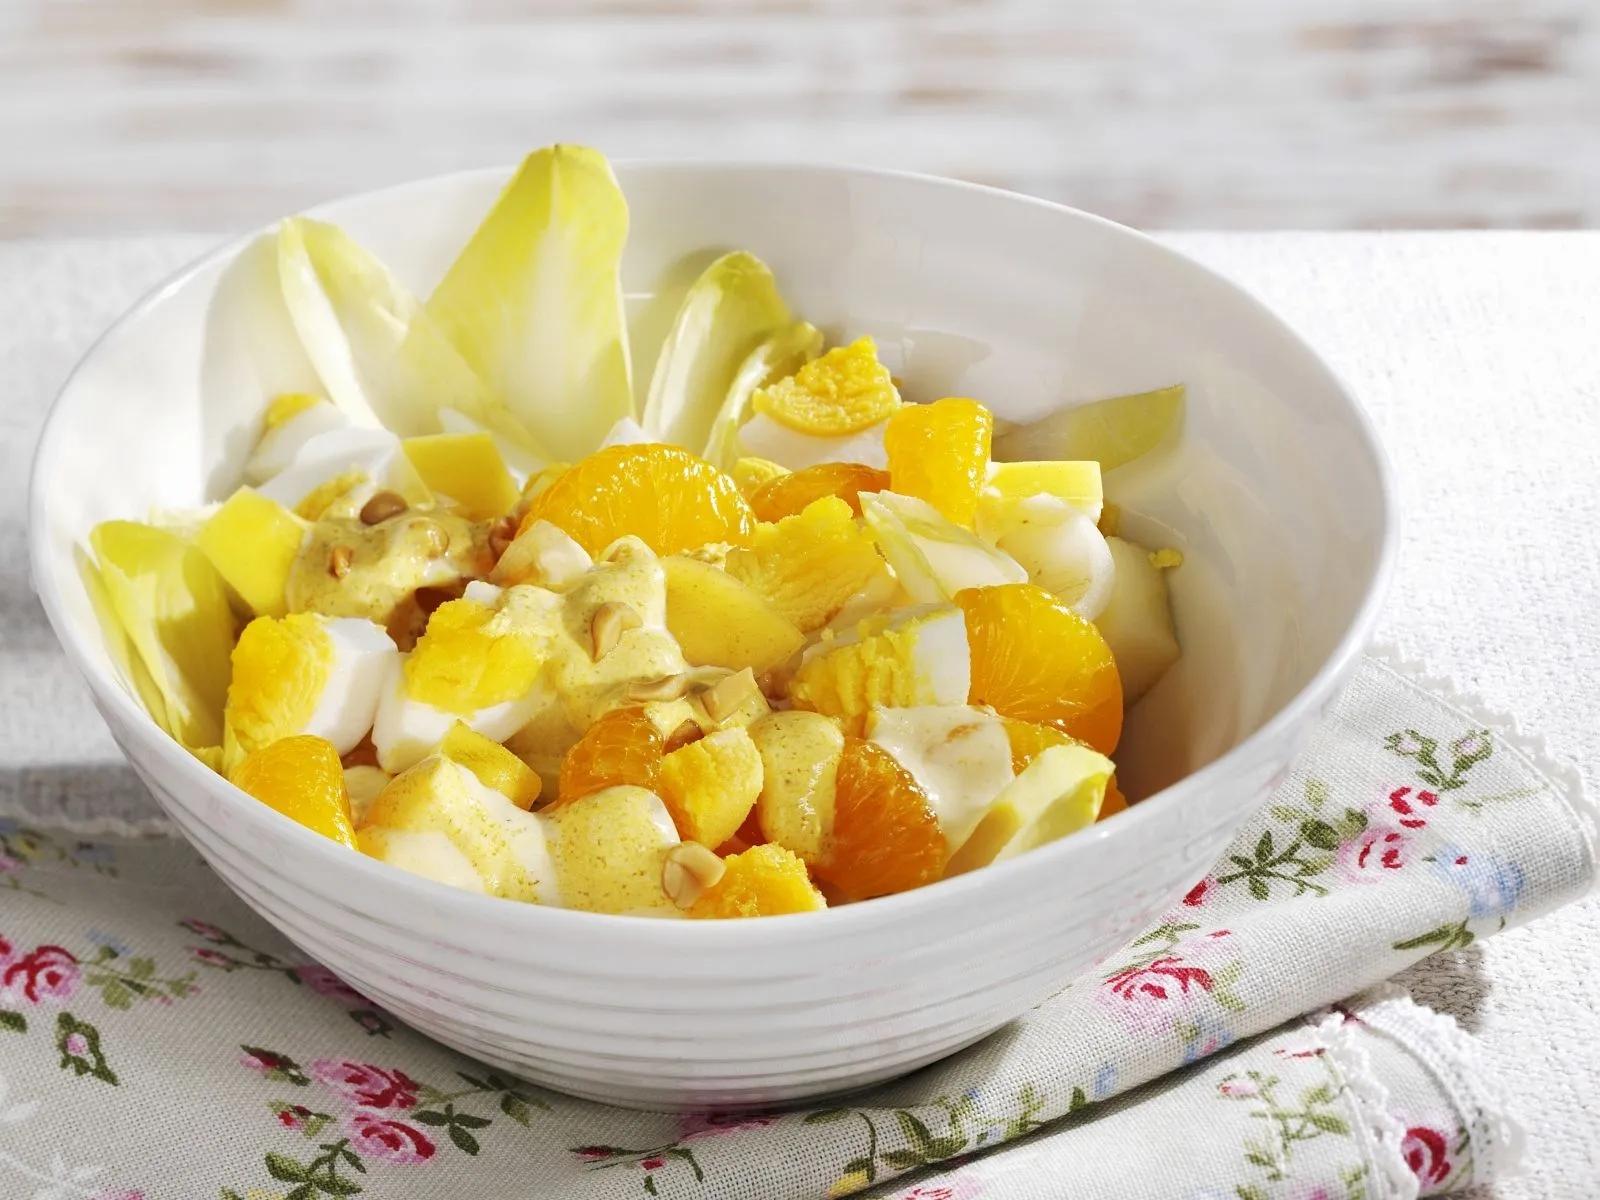 Chicorée-Mandarinen-Salat mit Ei Rezept | EAT SMARTER